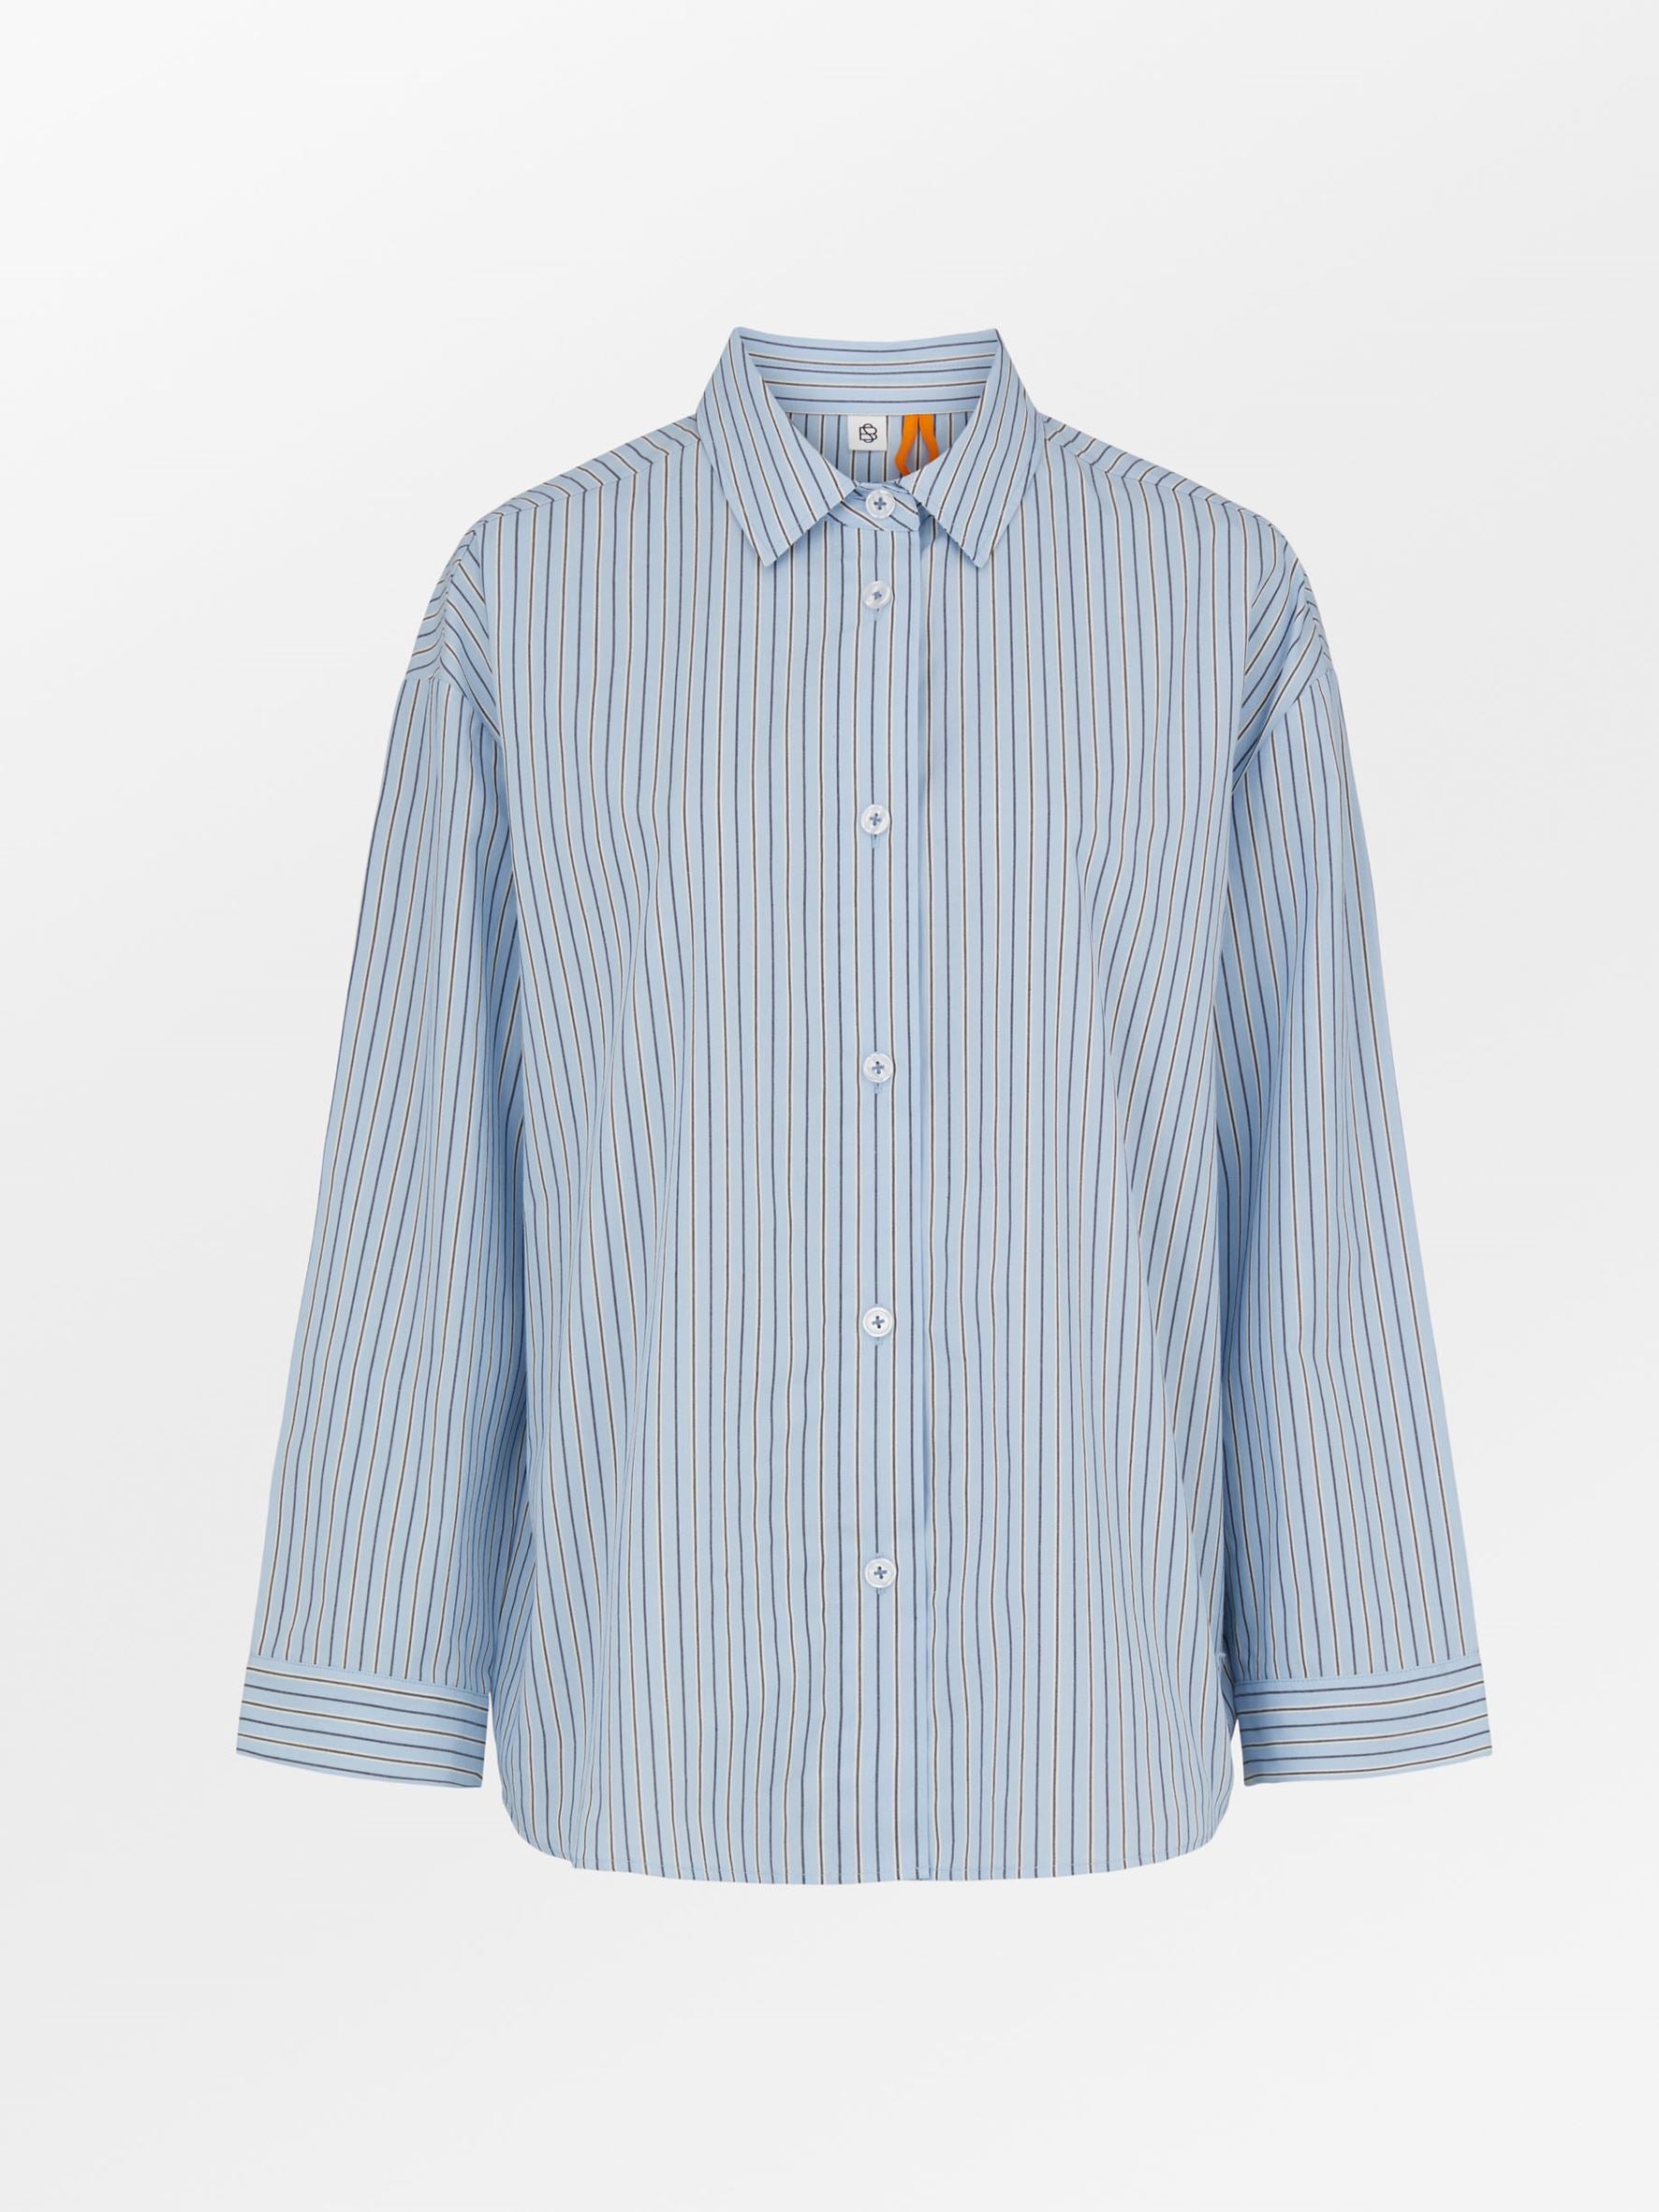 Stripel Pyjamas Set - Blue Sky  Clothing Becksöndergaard.se